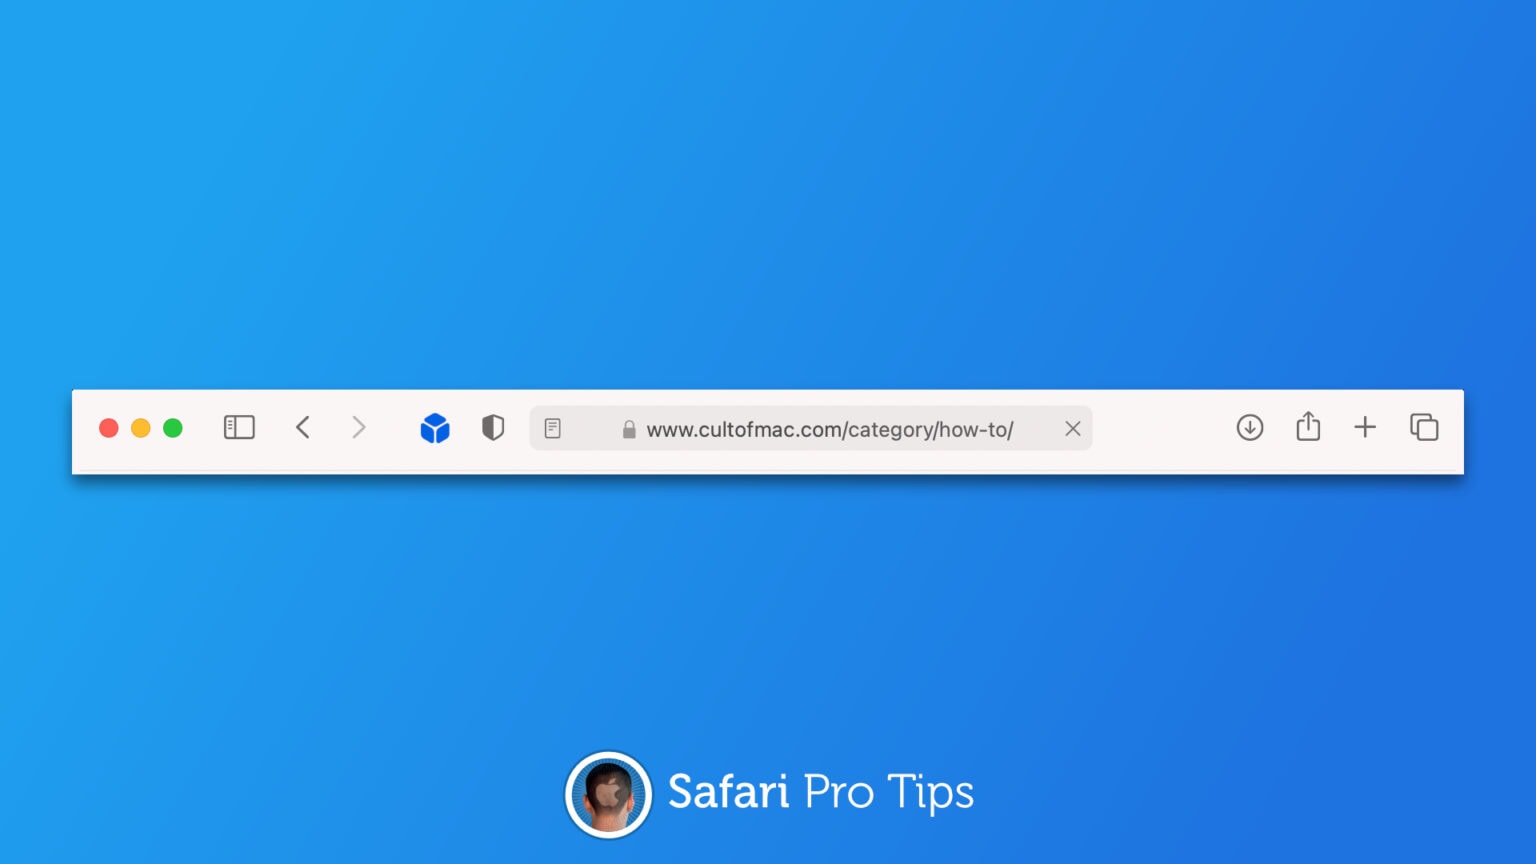 Show full URLs in Safari's address bar